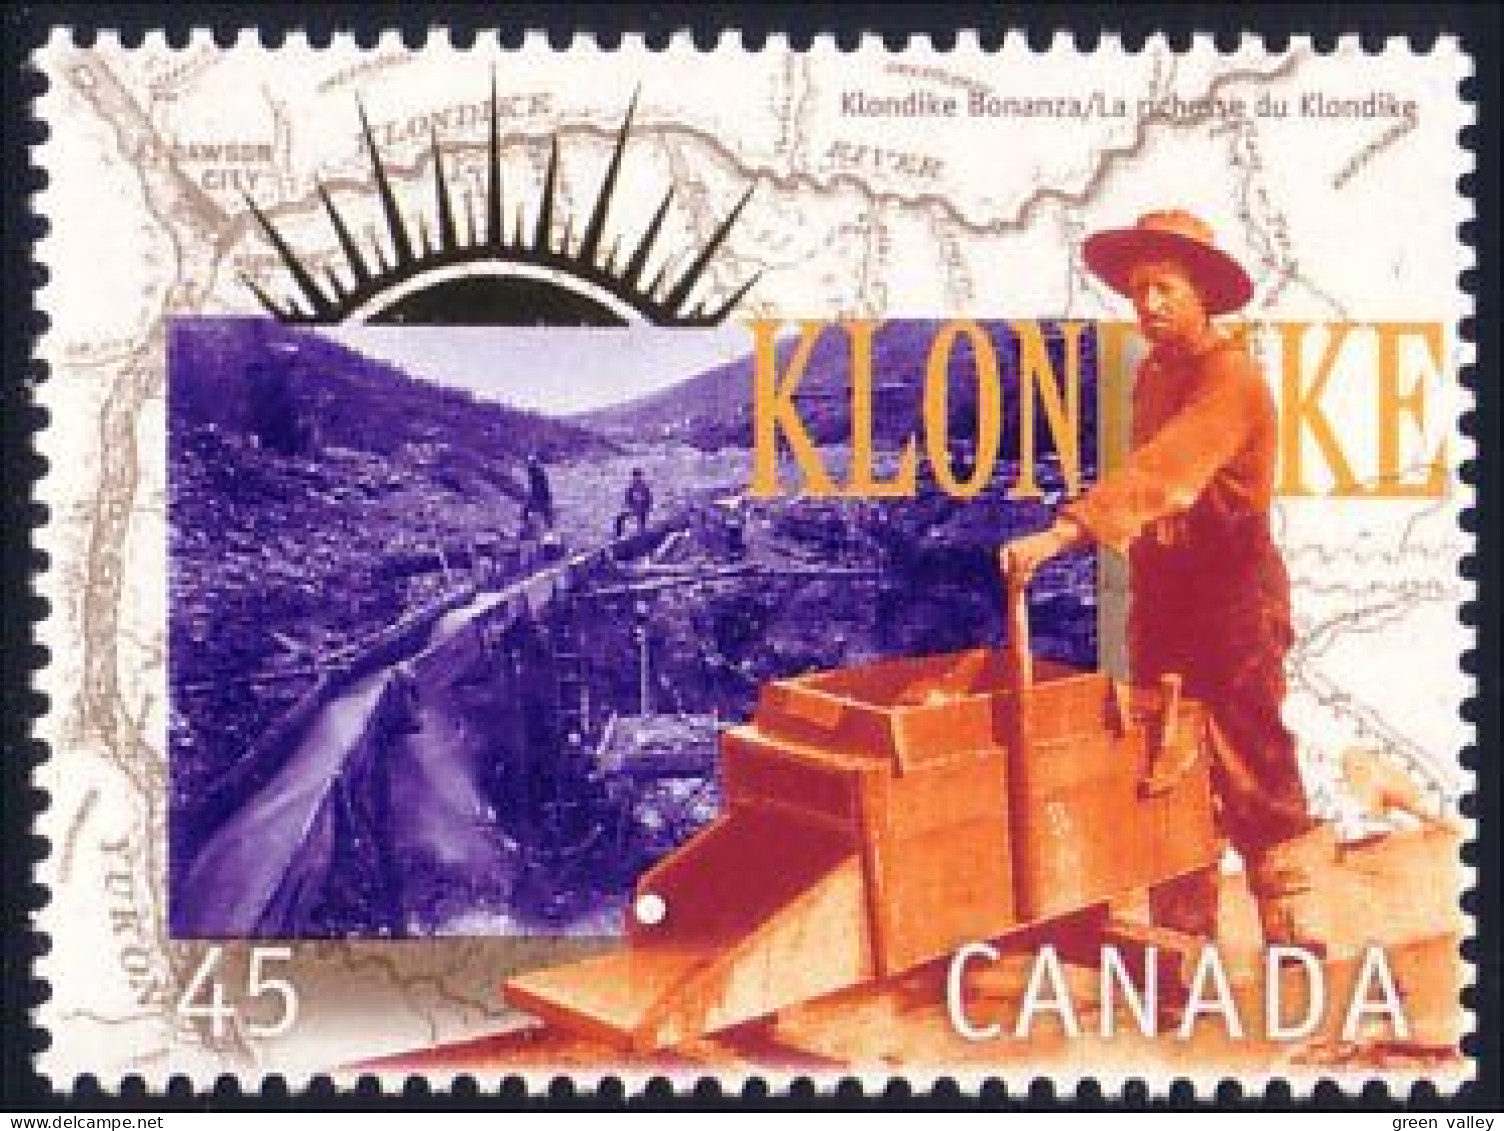 Canada Decouverte Or Klondike Gold Mine Mining MNH ** Neuf SC (C16-06eb) - Minéraux